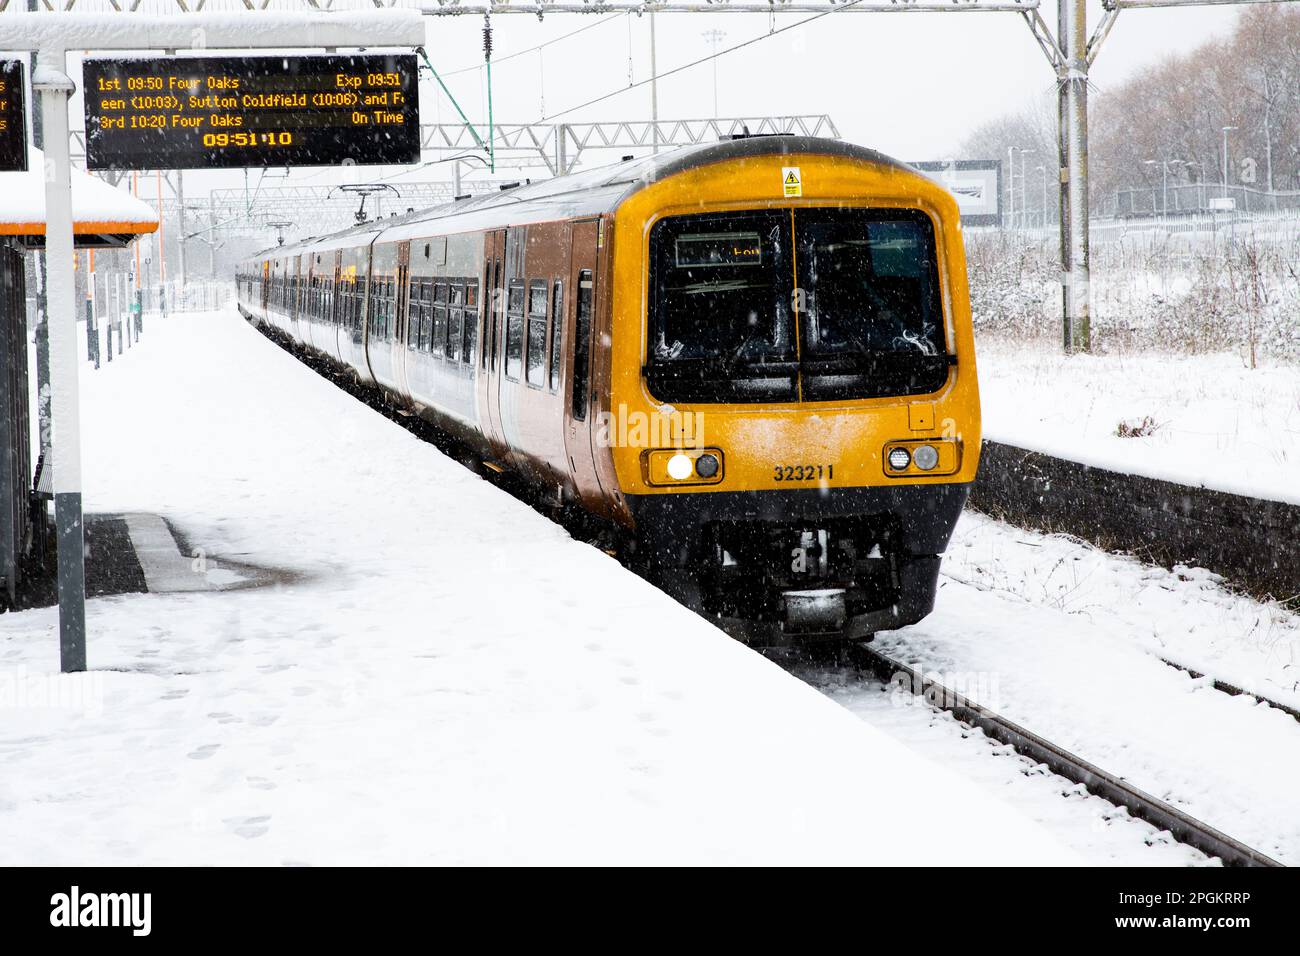 A West Midlands Trains passenger service at a snow covered Duddeston station platform near Birmingham with heavy snowfall causing travel disruption Stock Photo